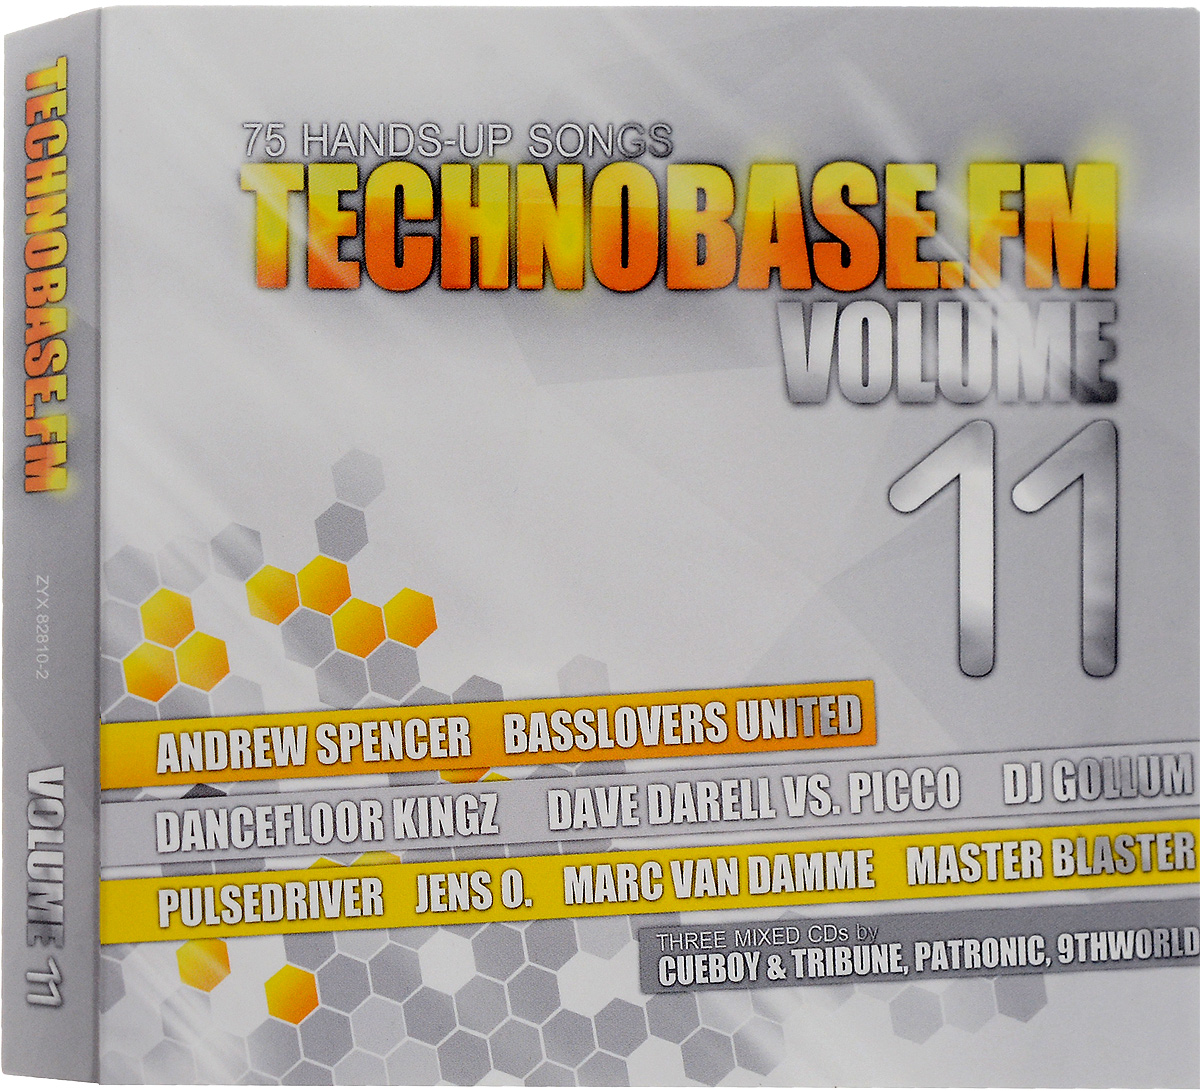 Technobase.Fm. Volume 11. Mixed By Cueboy & Tribune, Patronic, 9thworld (3 CD)